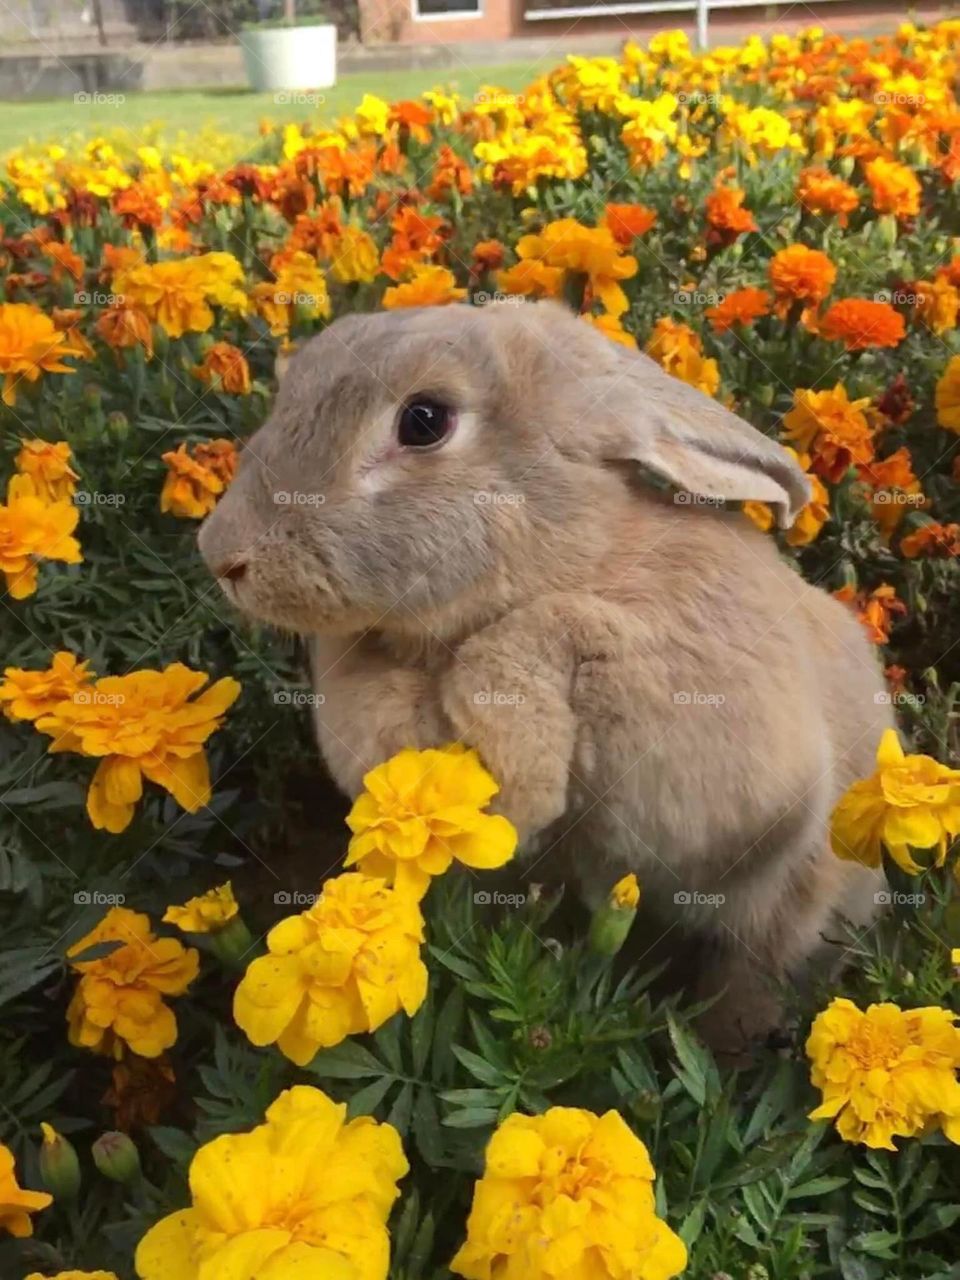 Bunny flowers